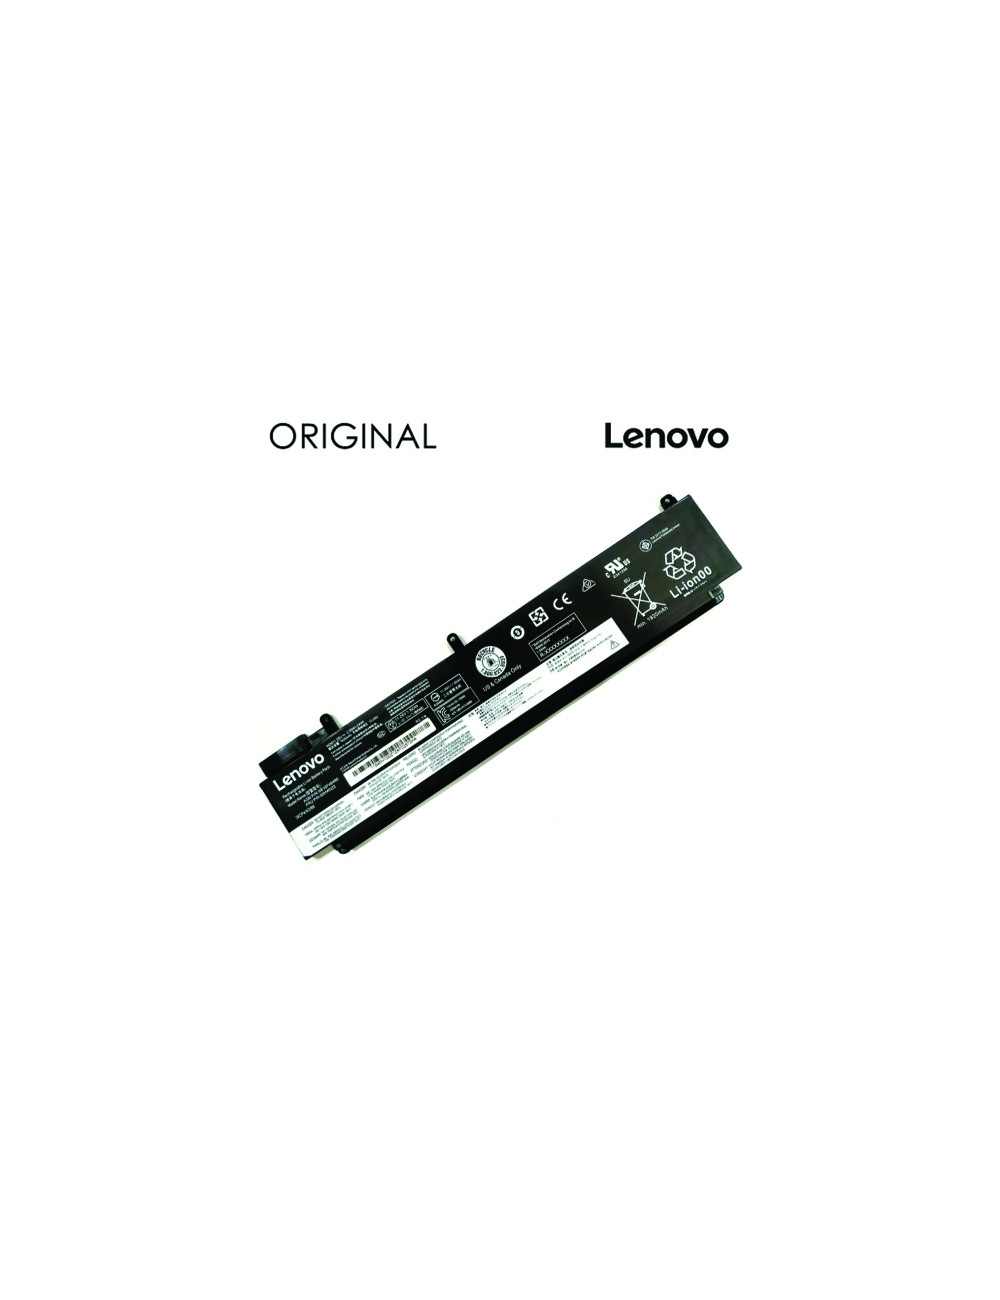 Nešiojamo kompiuterio baterija LENOVO SB10F46460 00HW022, 2090 mAh, Original